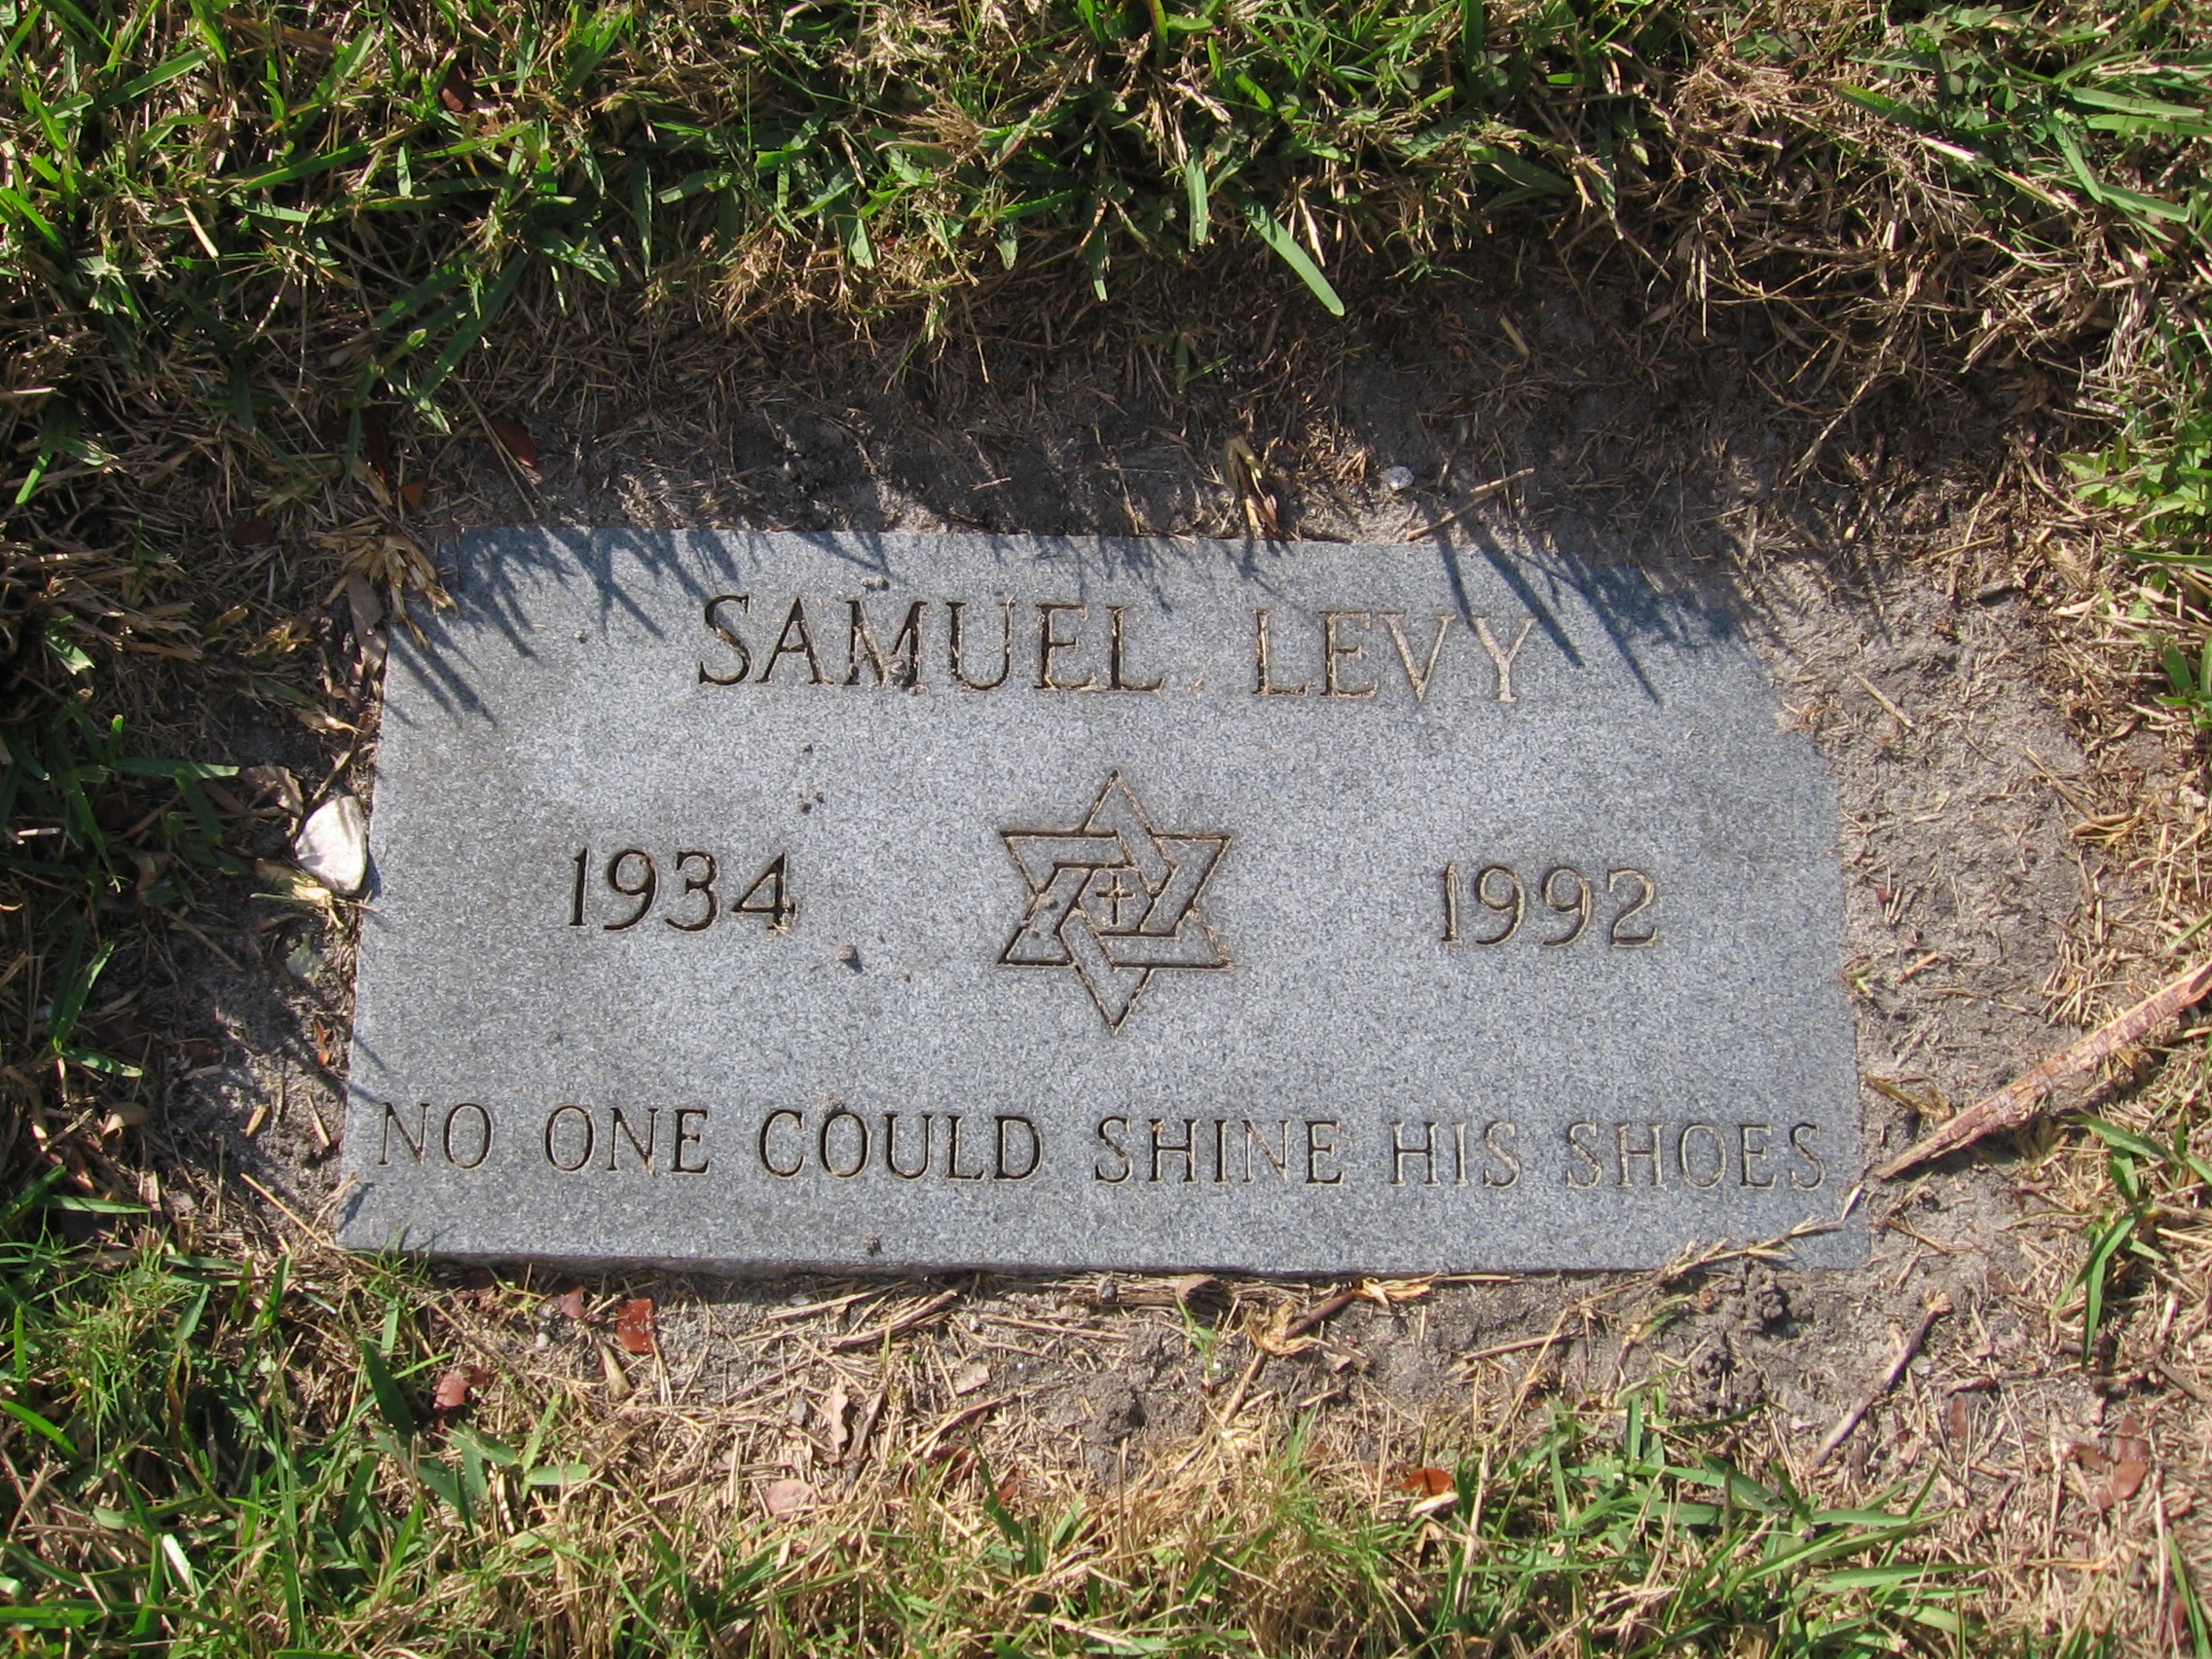 Samuel Levy